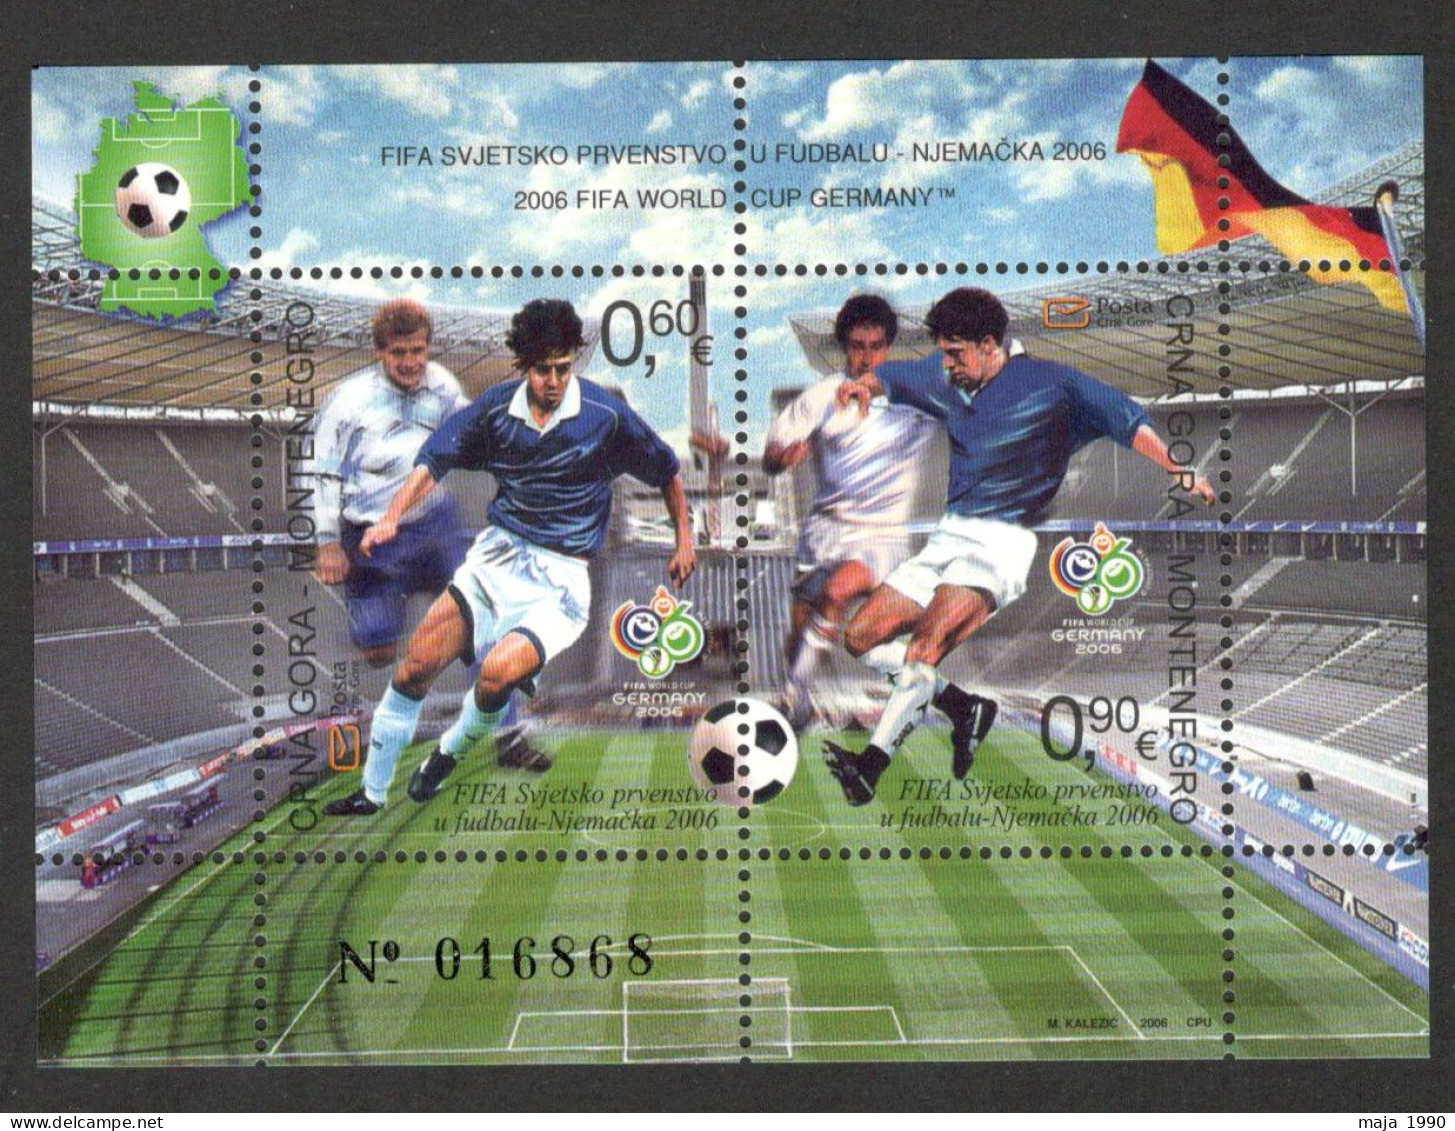 MONTENEGRO - MNH BLOCK- SPORT - SOCCER - FOOTBALL, FIFA WORLD CUP GERMANY 2006. - Montenegro